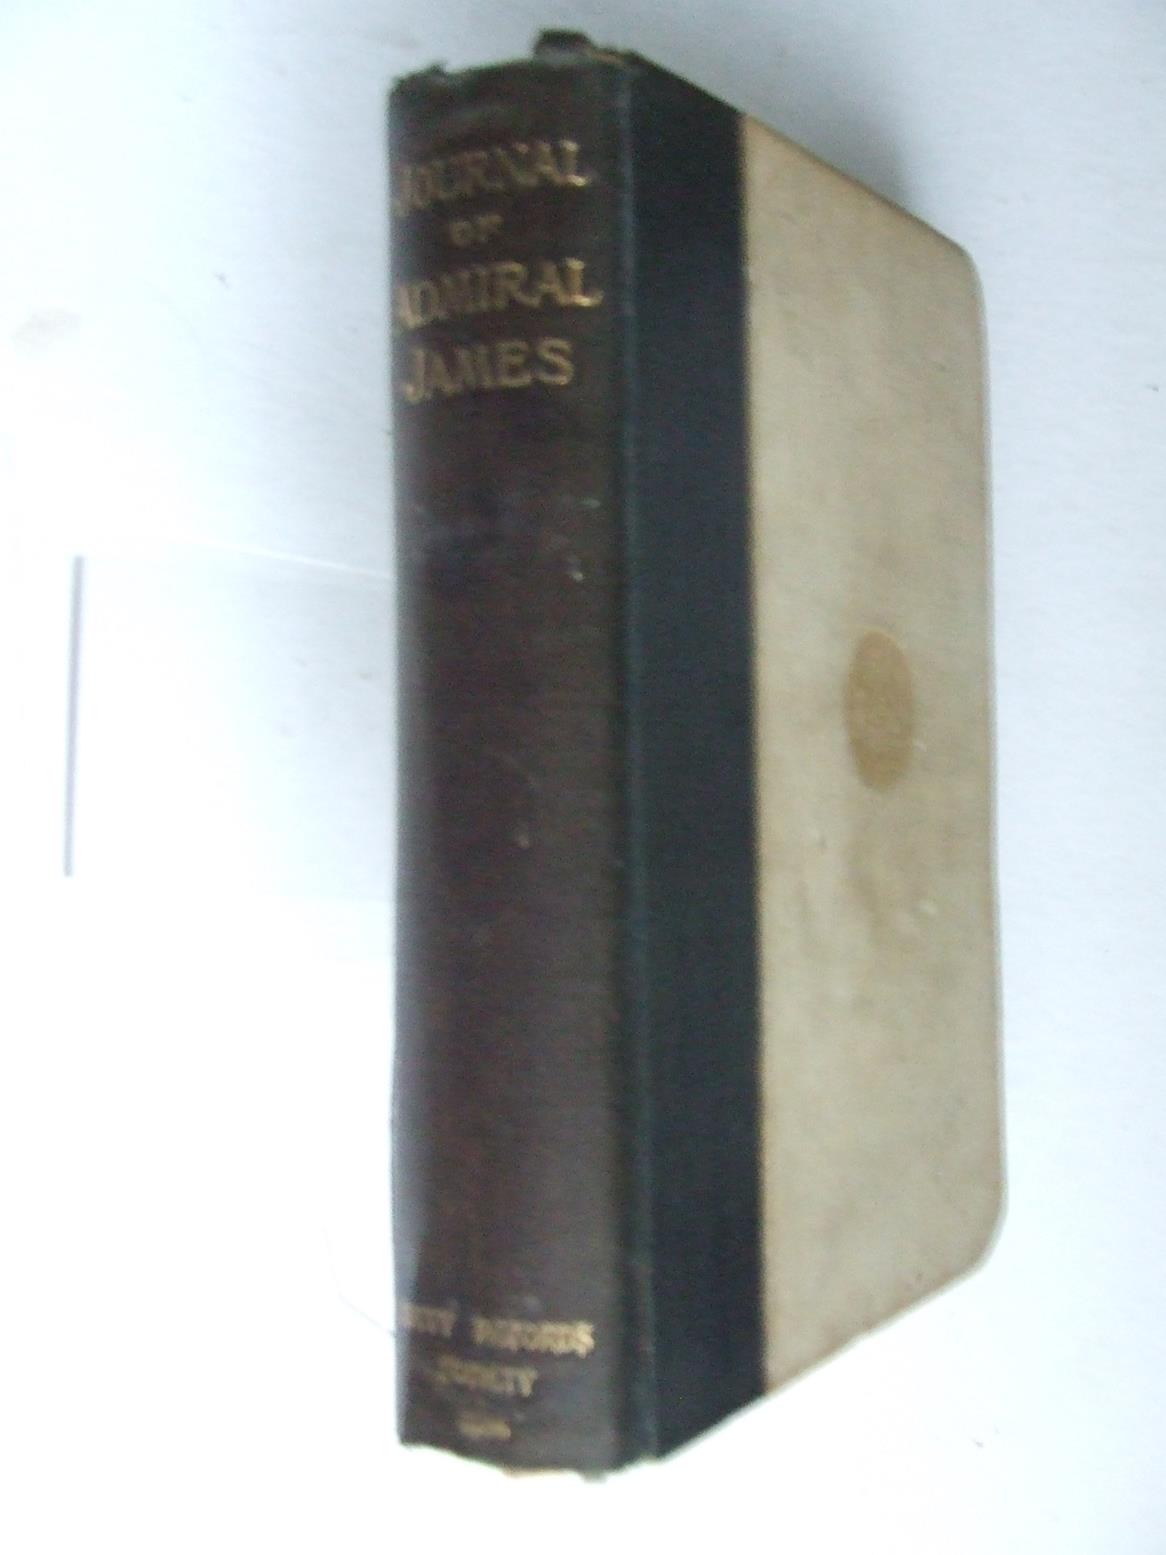 Journal of Rear-Admiral Bartholomew James 1752-1828